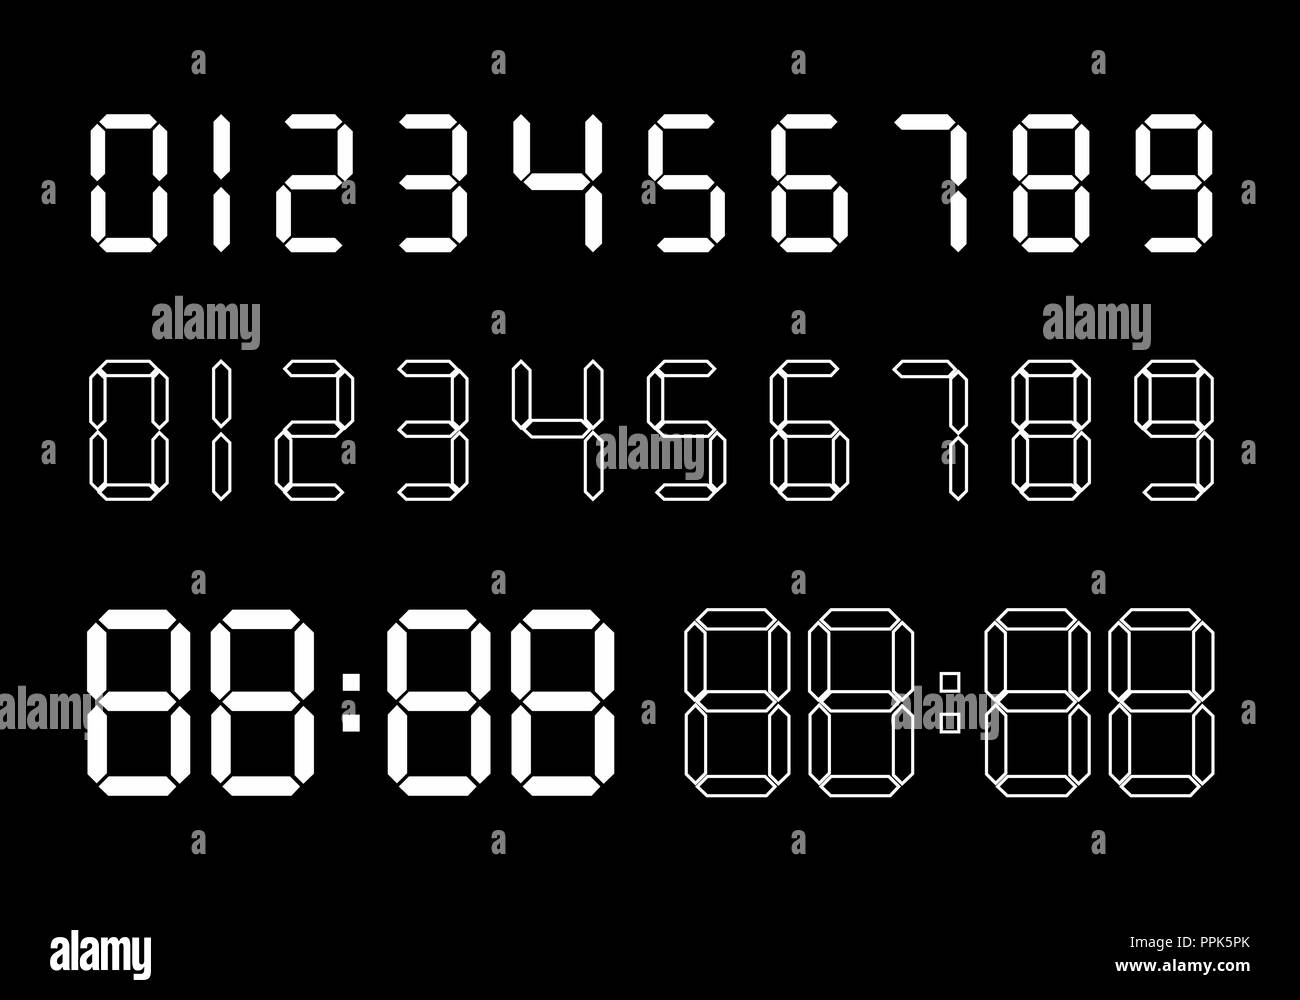 Set of digital numbers on dark background Stock Vector